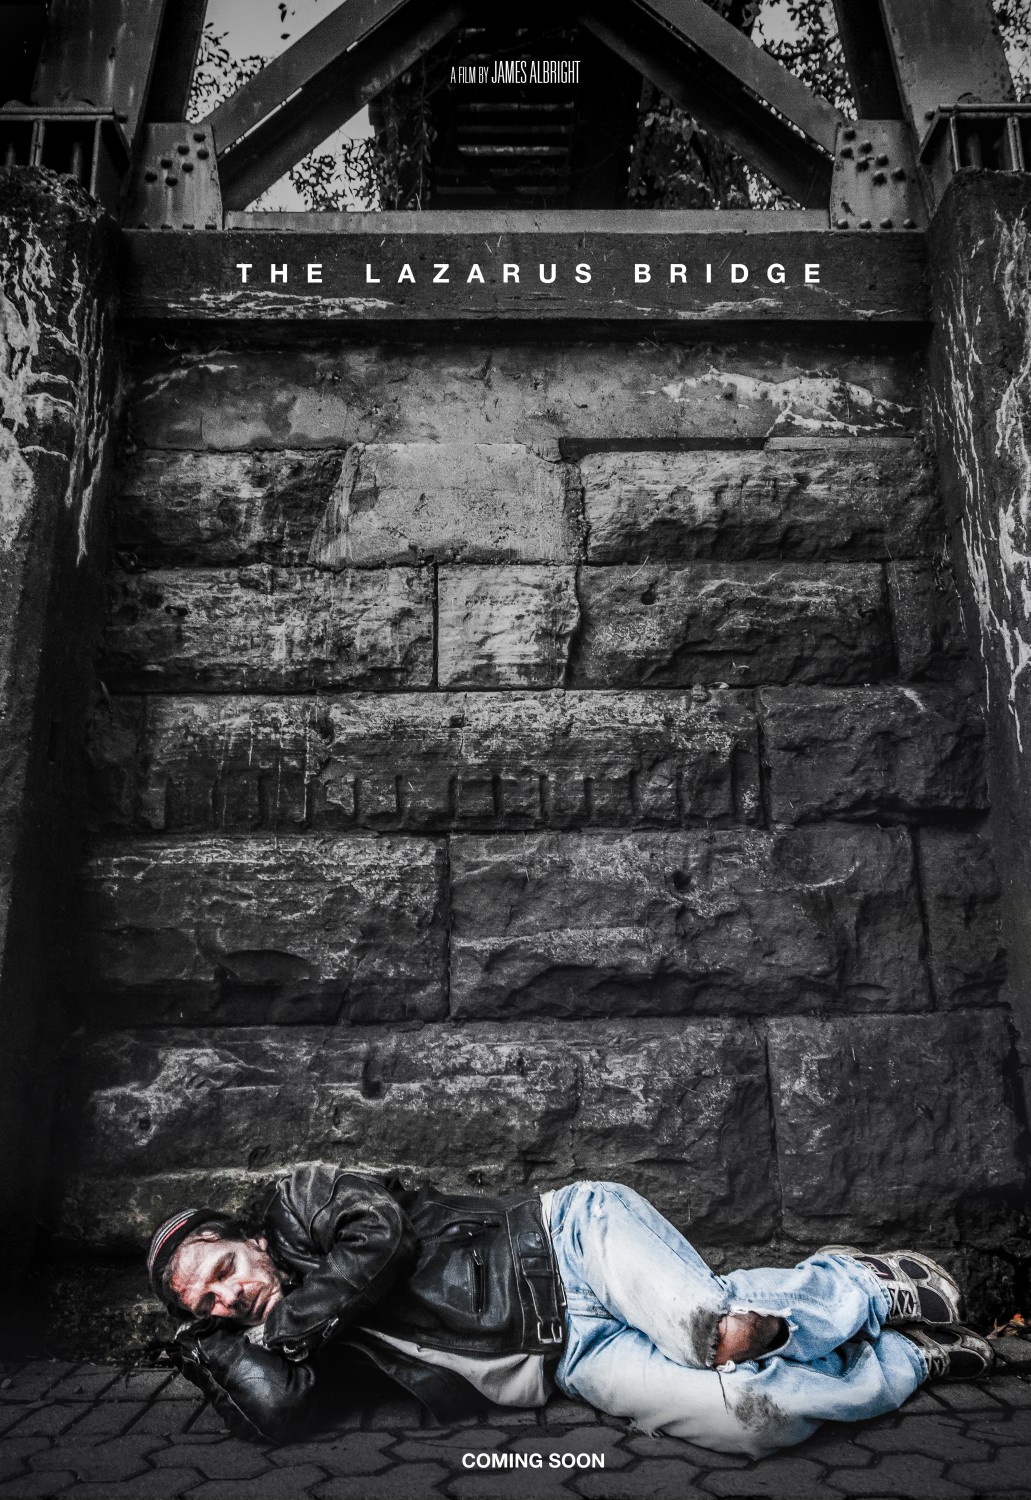 Extra Large Movie Poster Image for The Lazarus Bridge